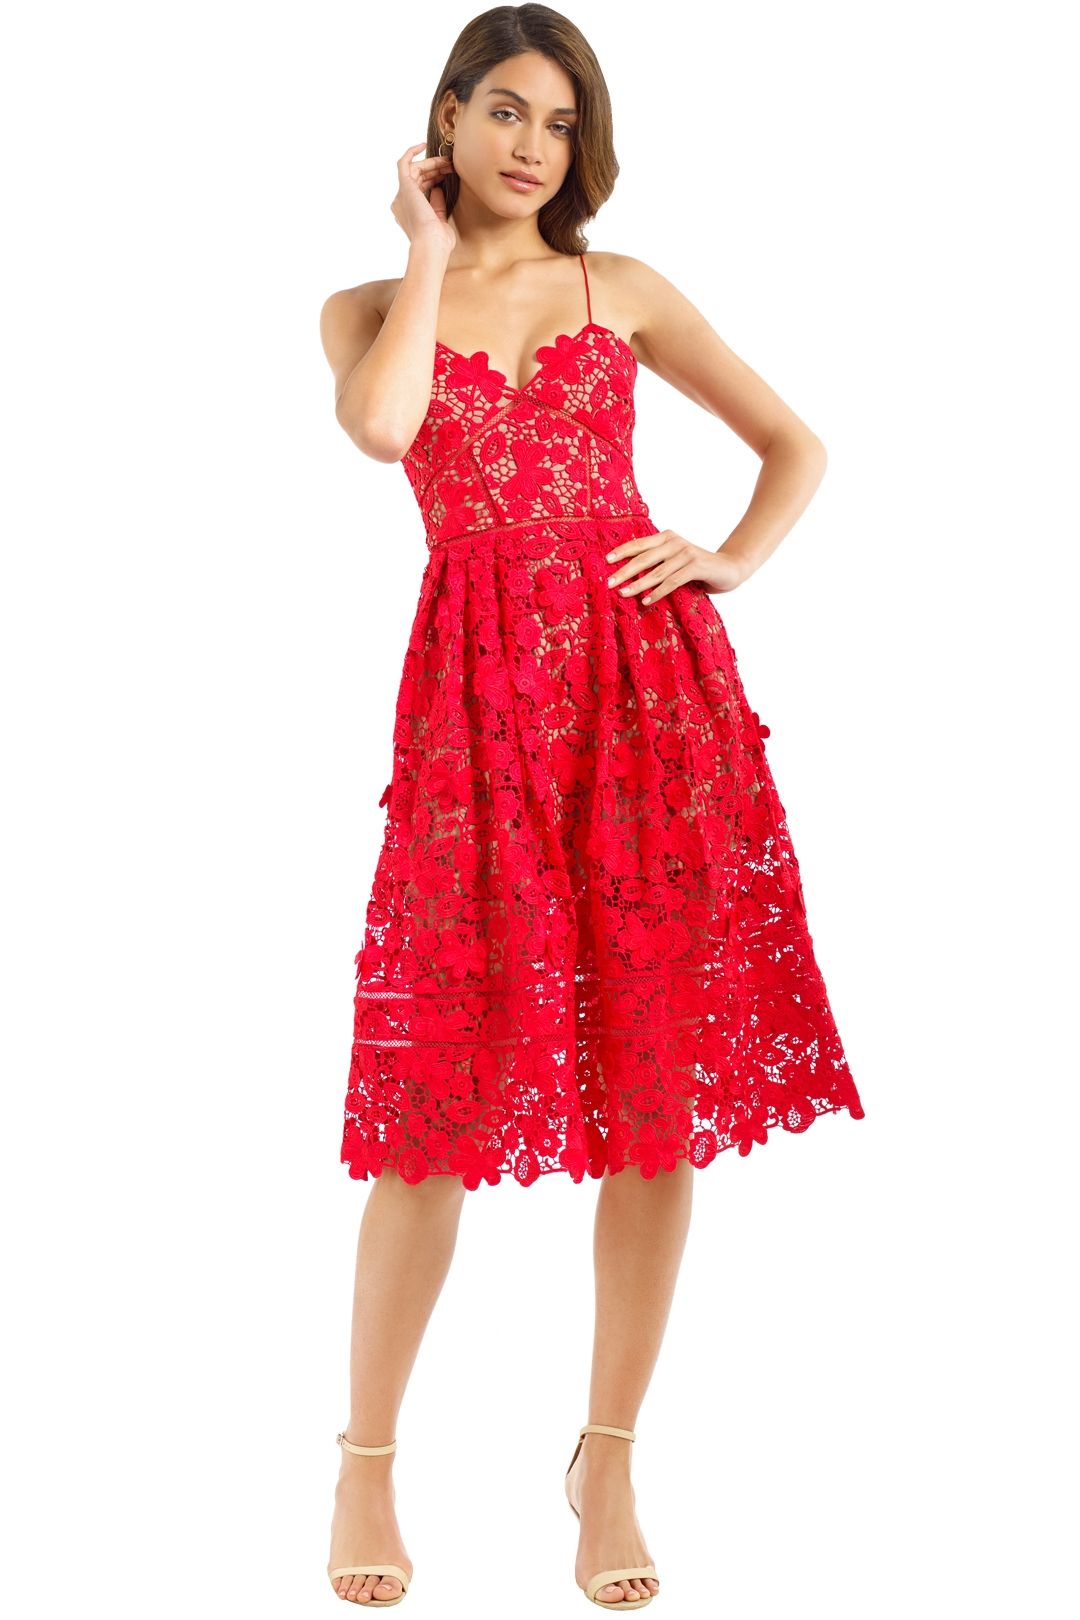 Self Portrait - Floral Azaelea Dress - Tomato Red - Front